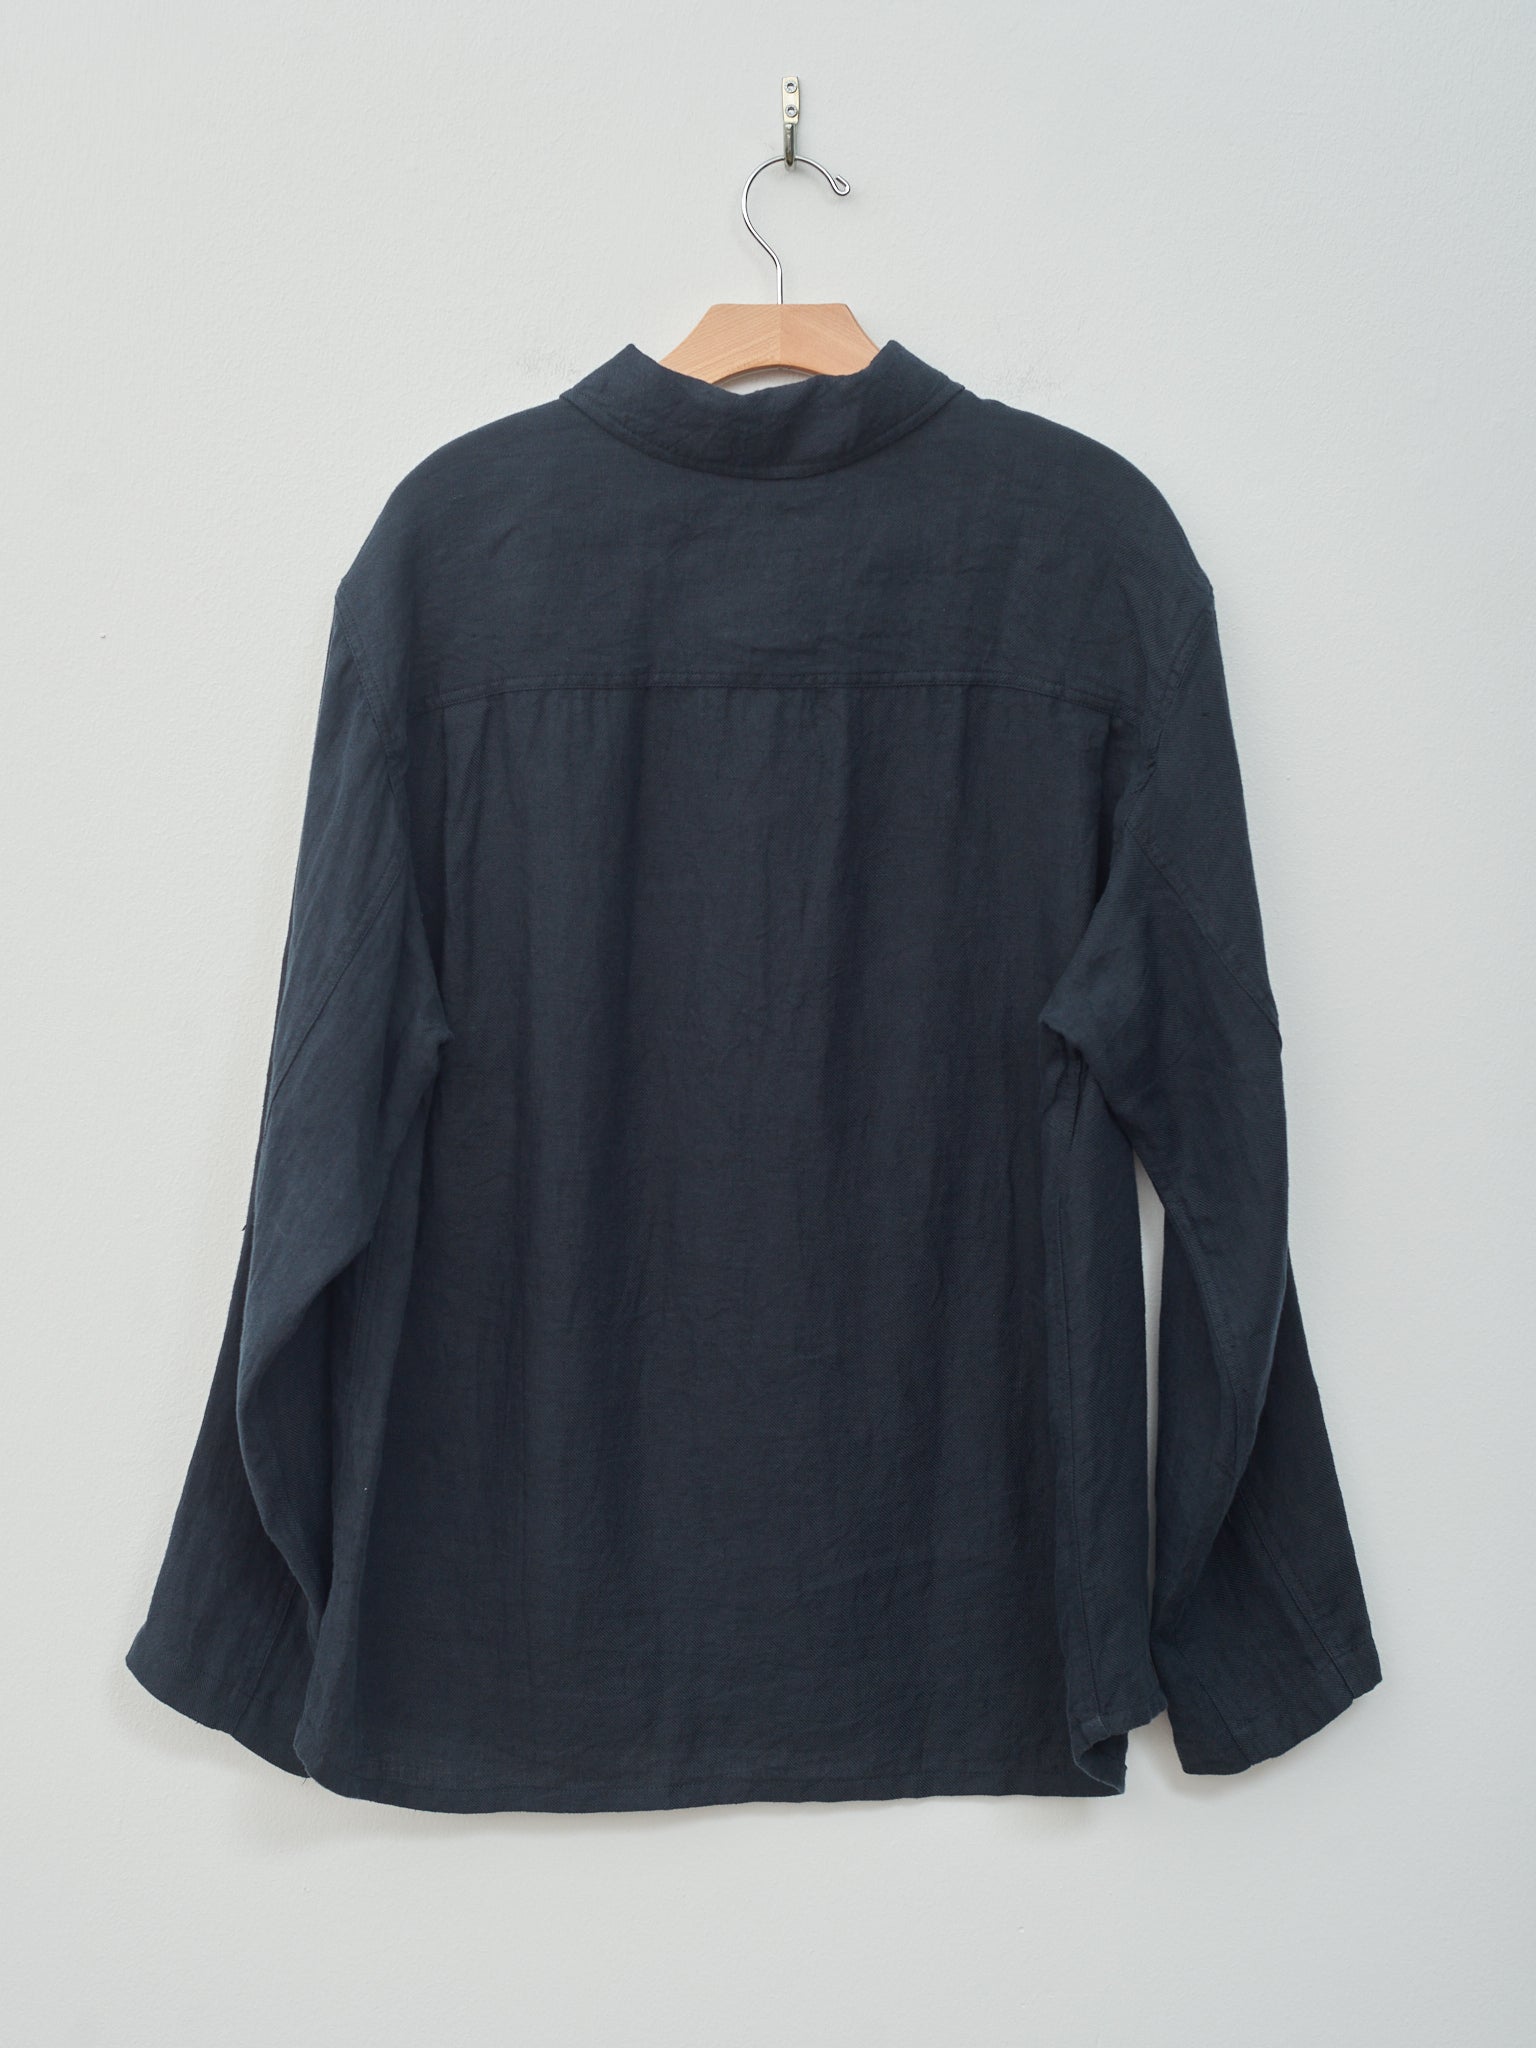 Namu Shop - Document Linen French Shirt - Navy